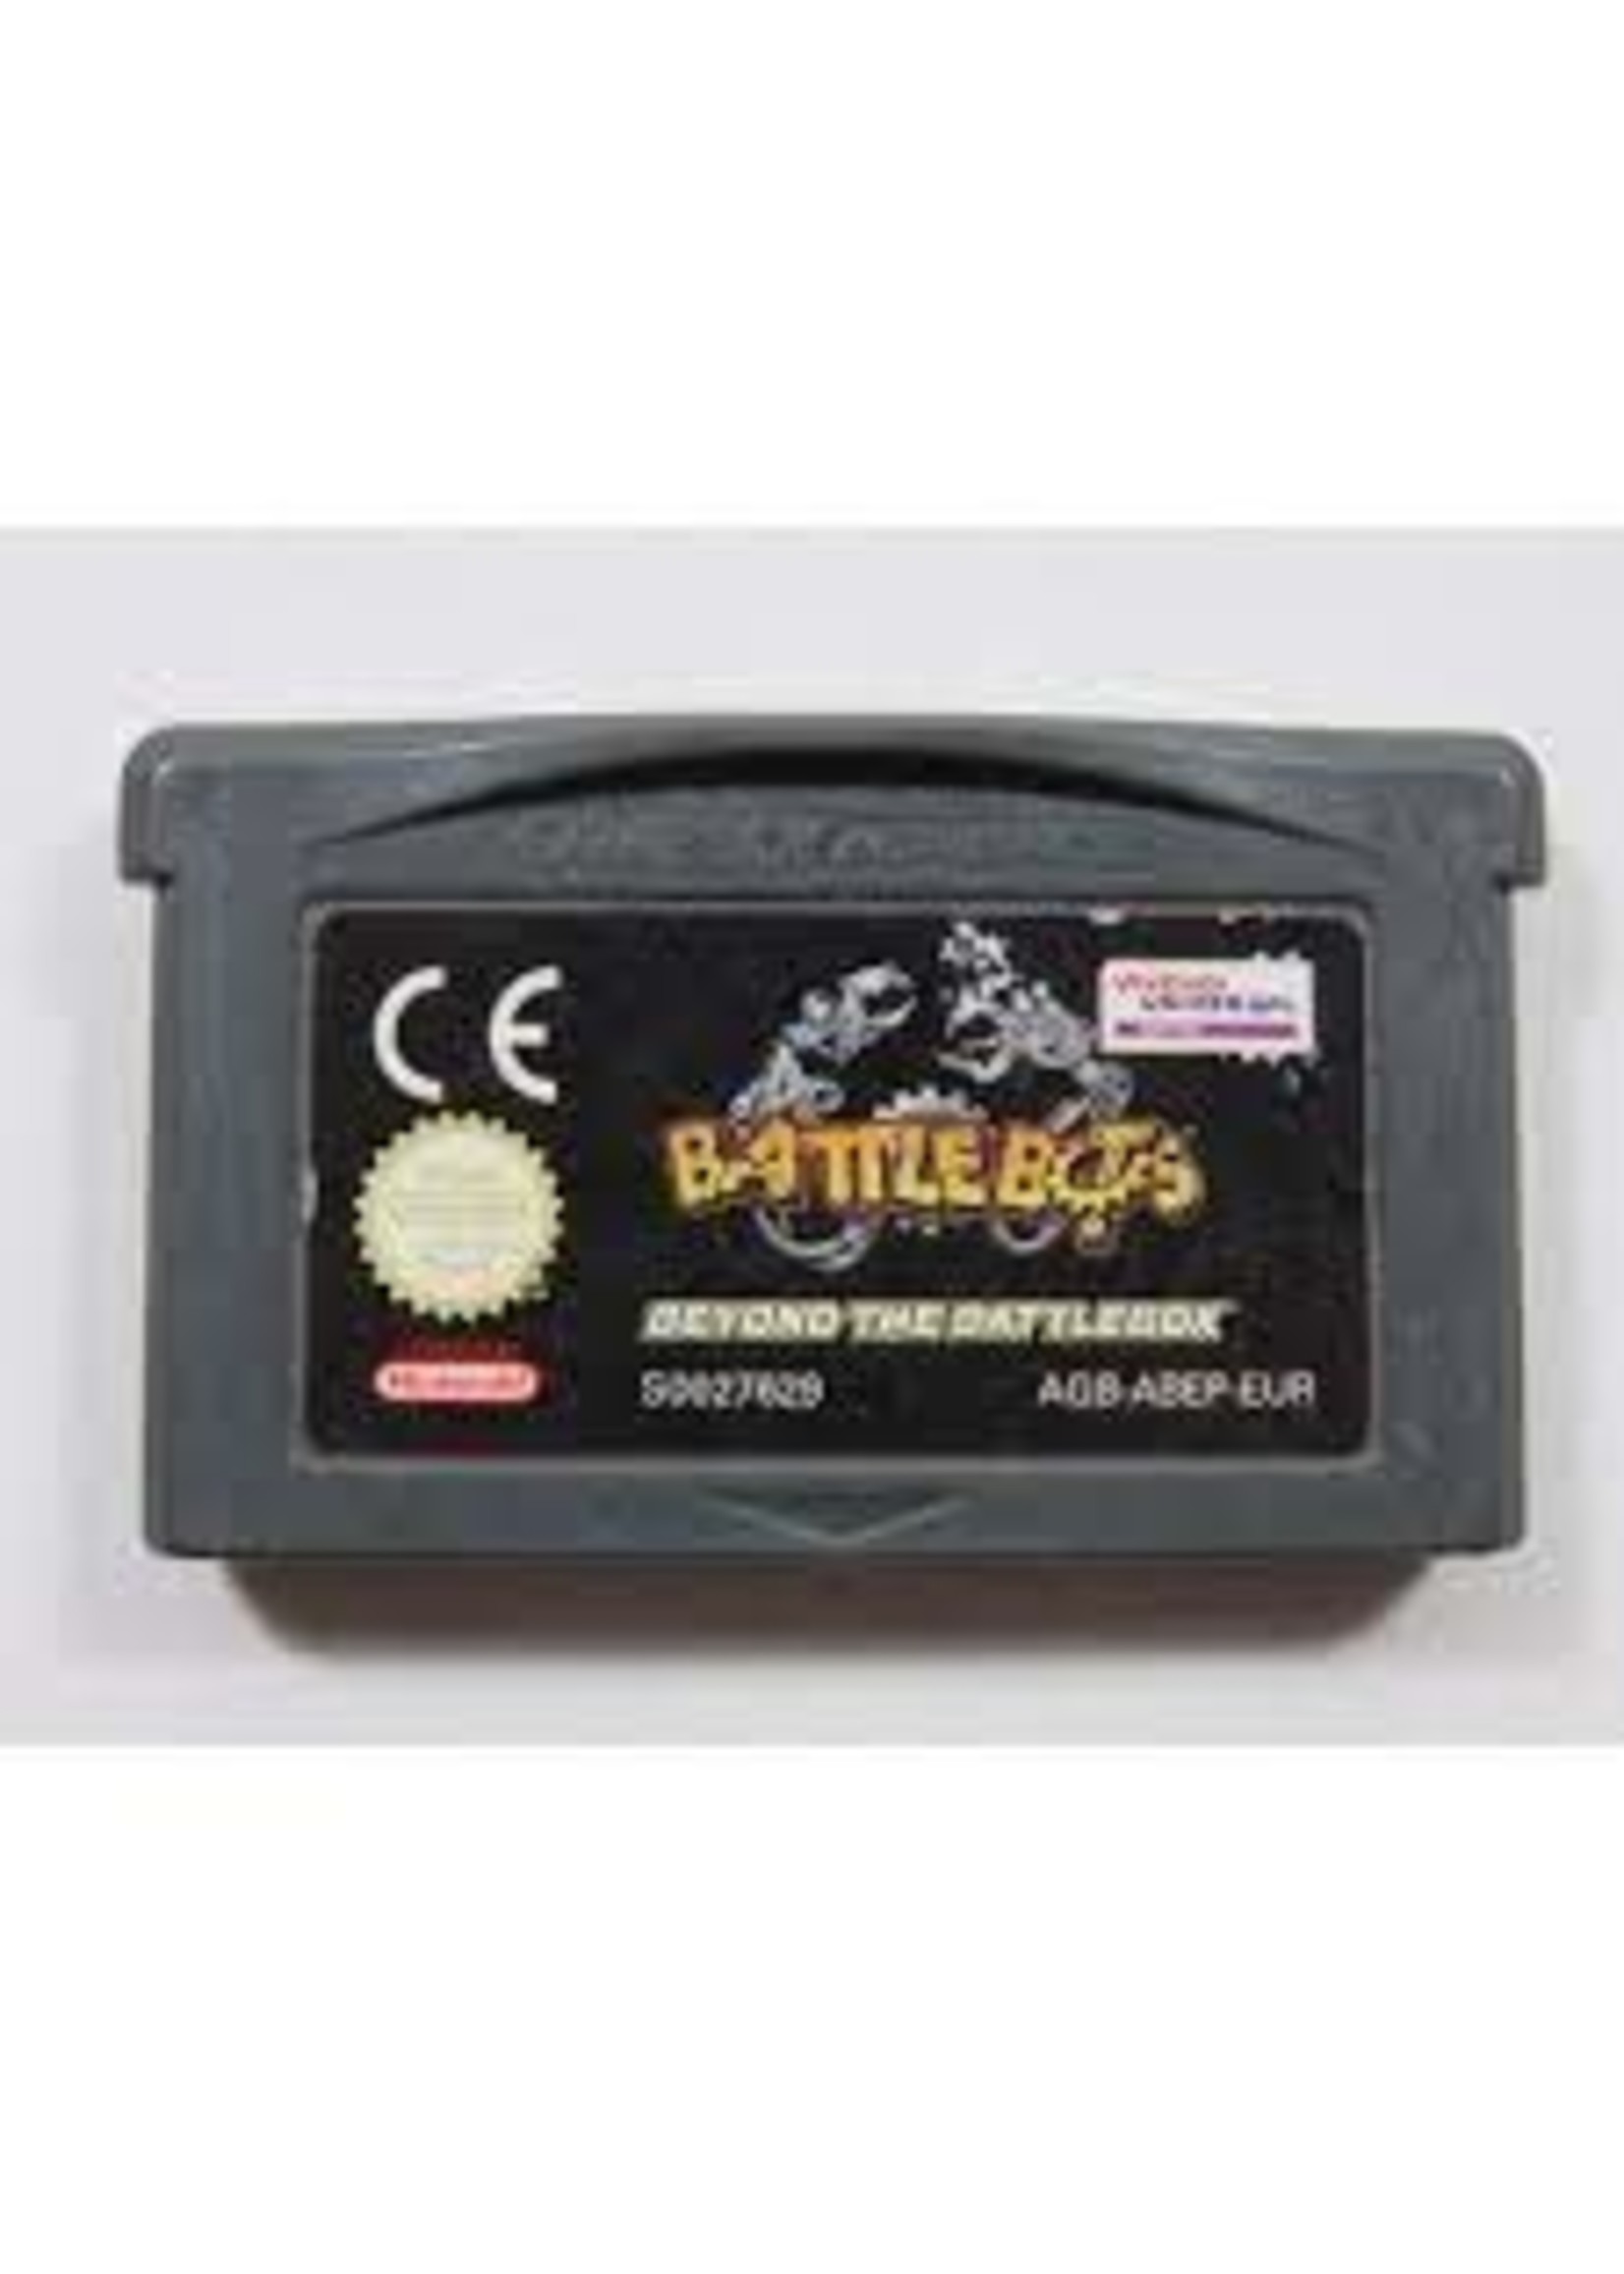 Nintendo Gameboy Advance Battlebots Beyond the Battlebox